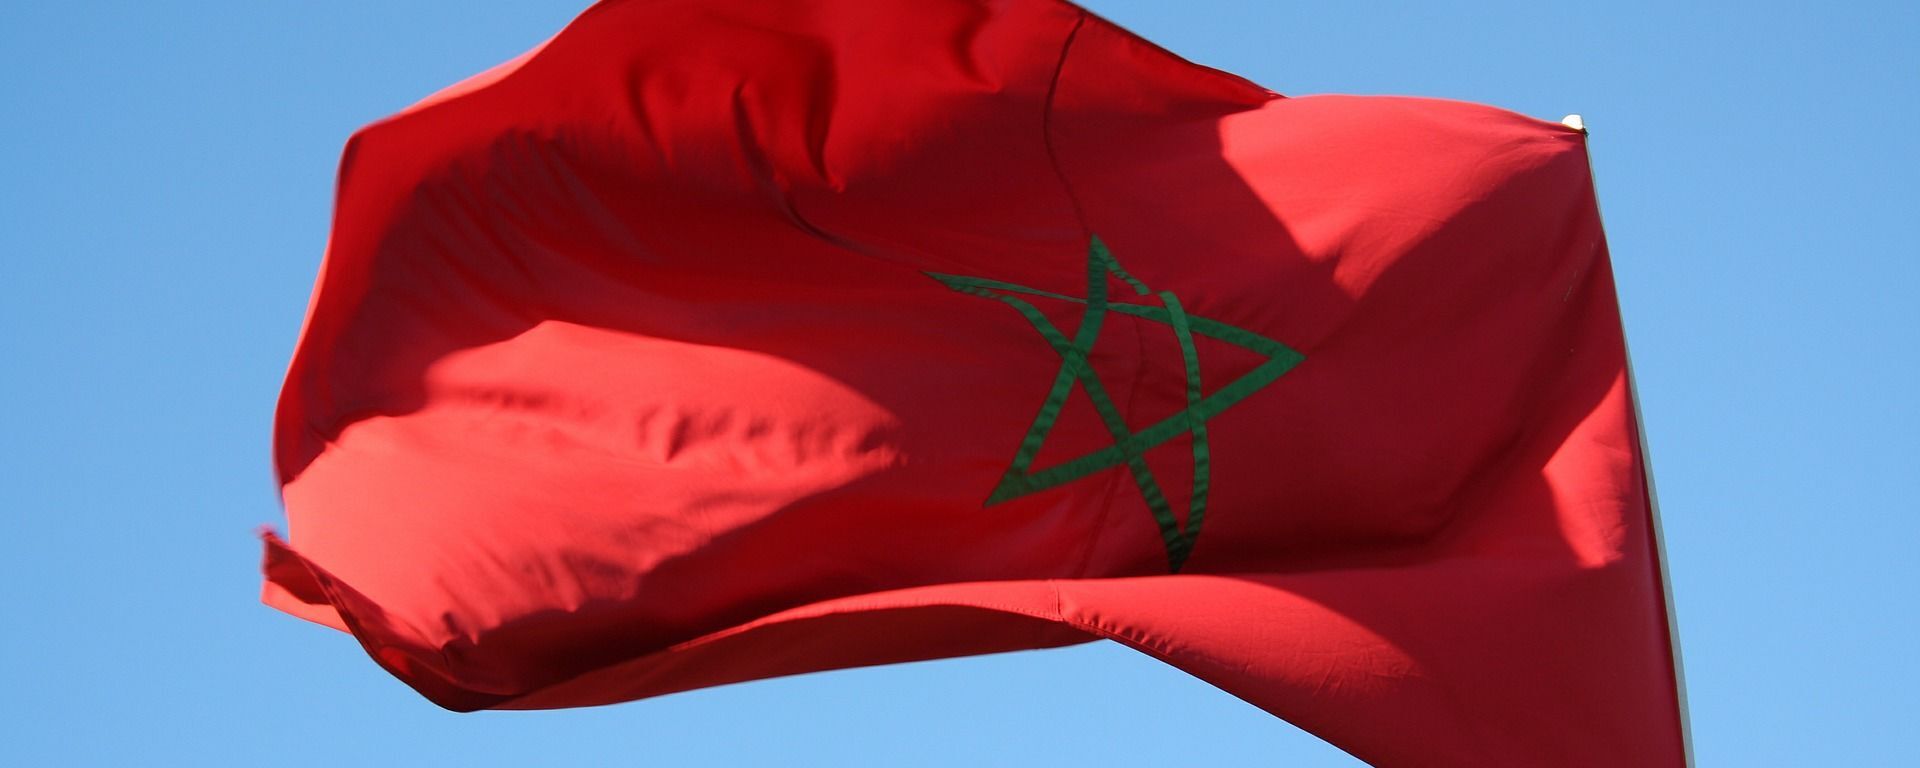 Bandera de Marruecos - Sputnik Mundo, 1920, 11.06.2021